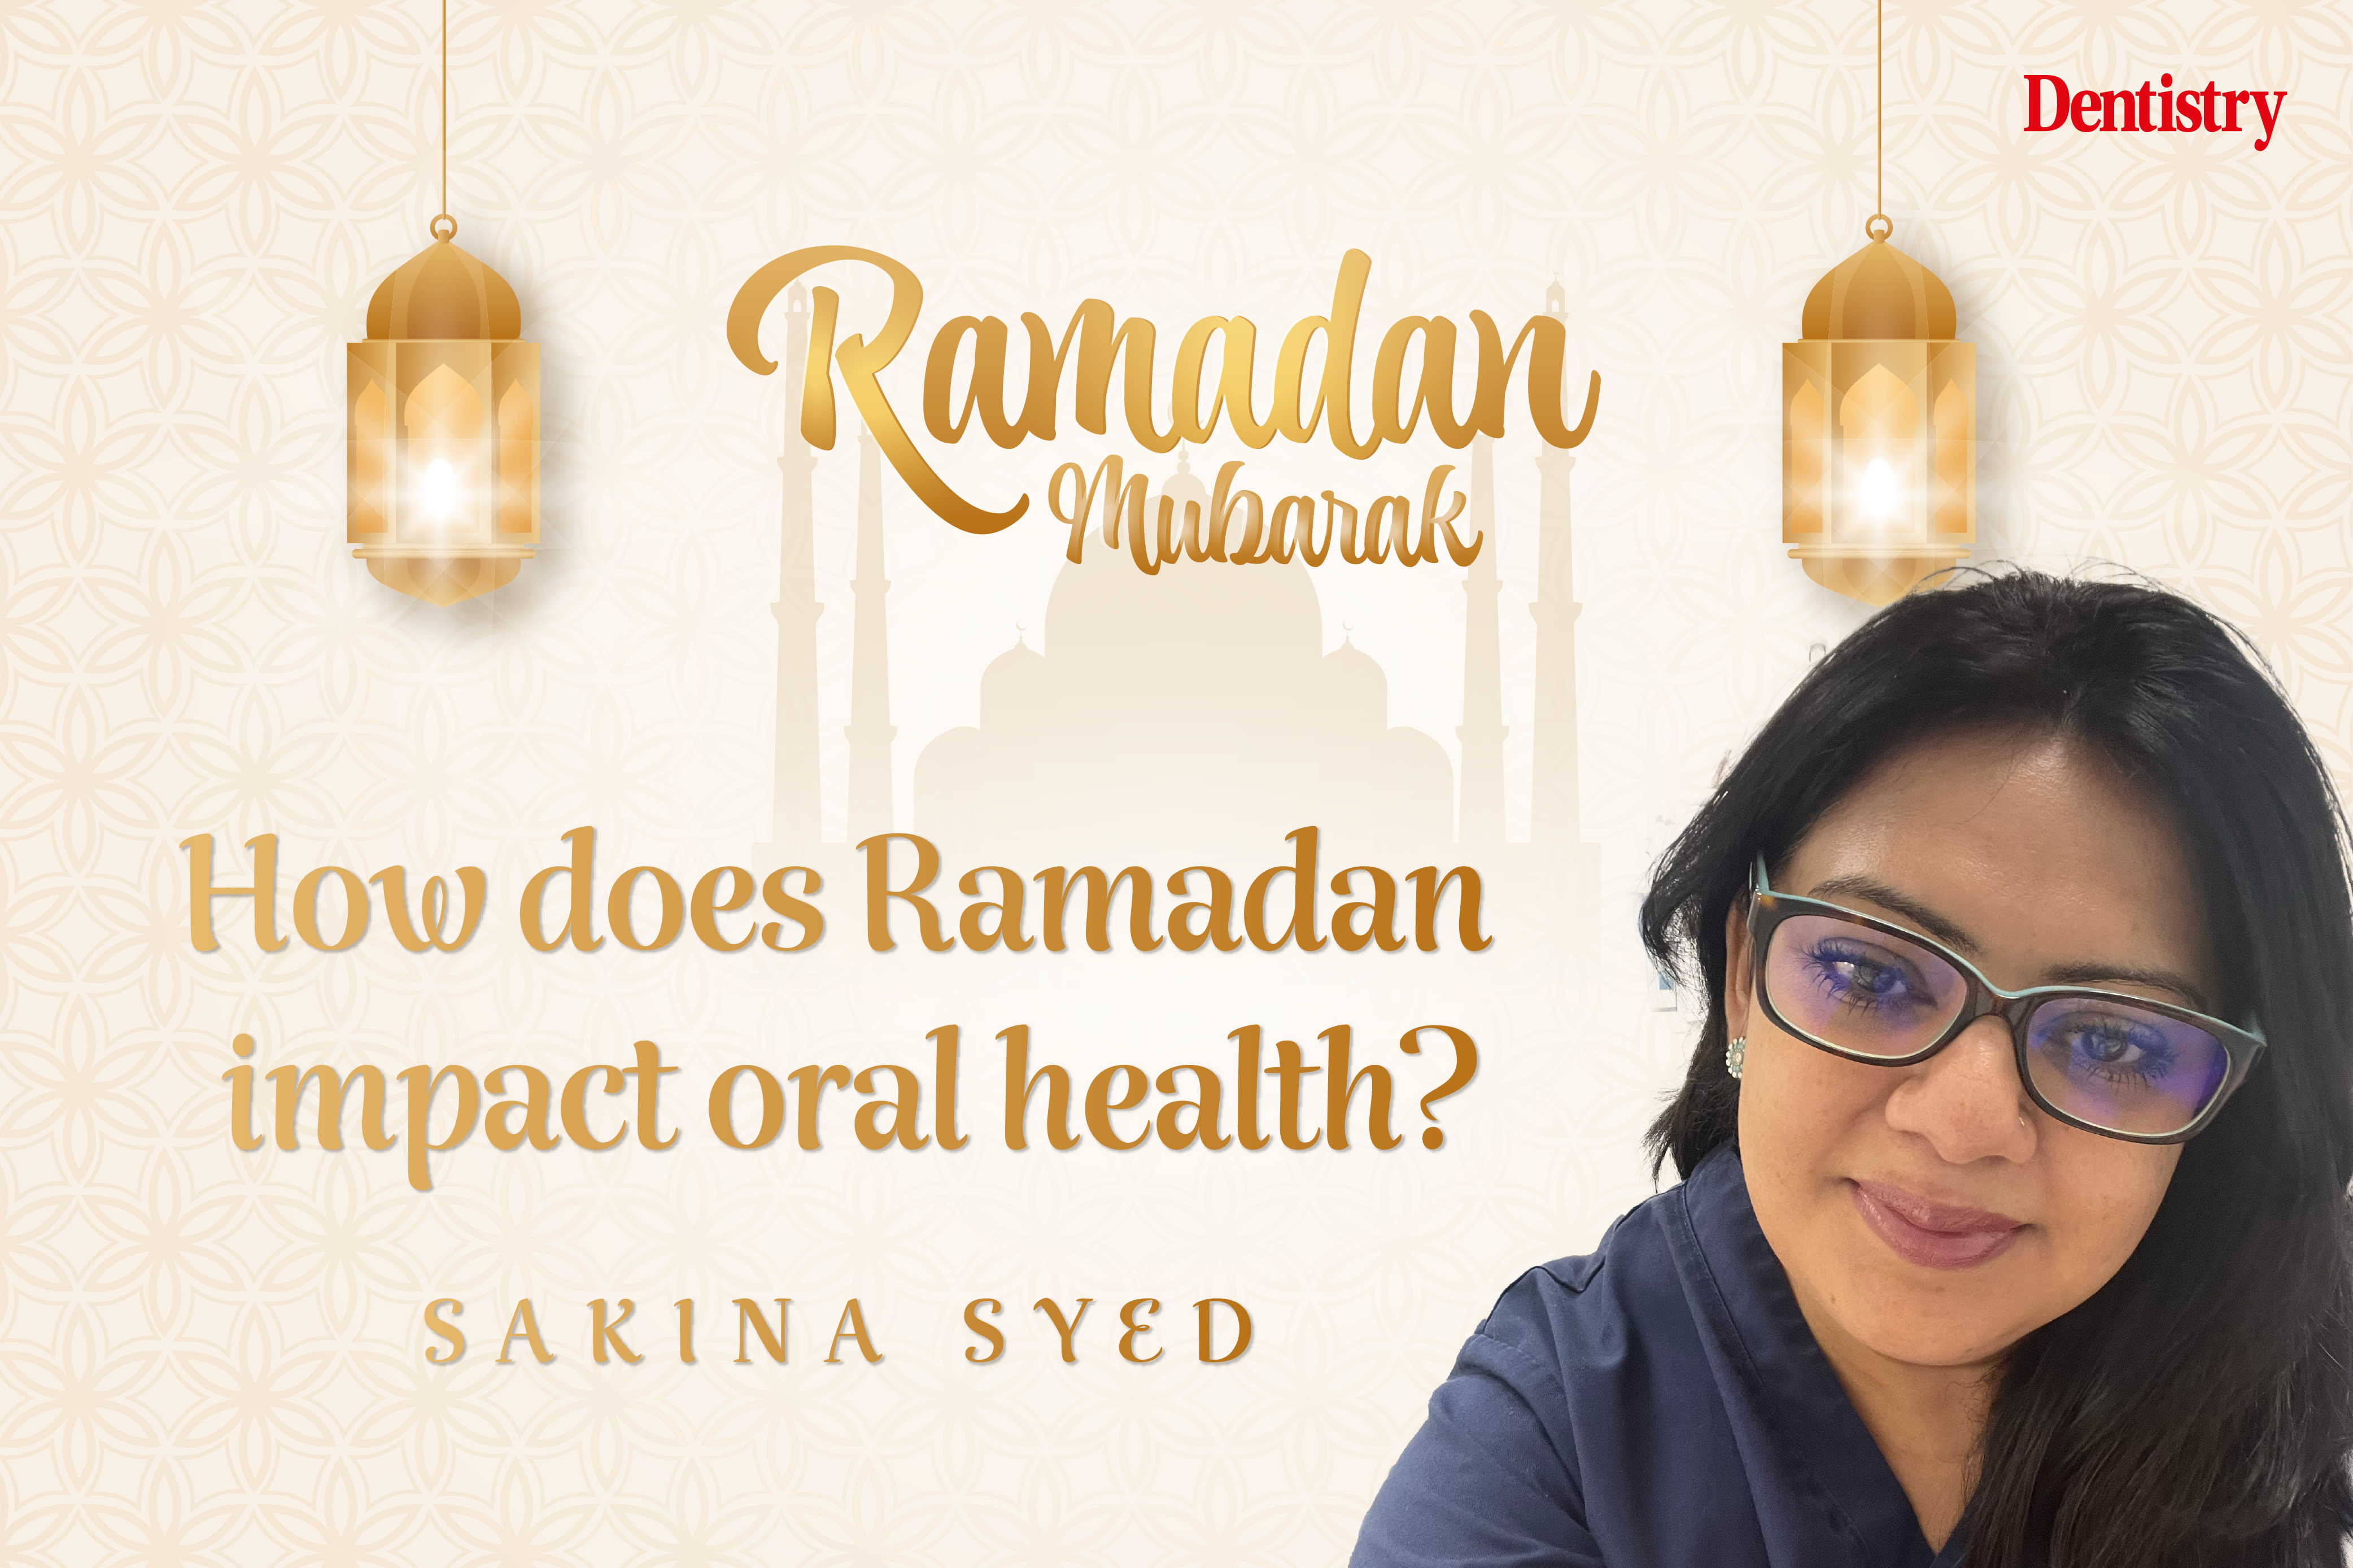 How does Ramadan impact oral health?